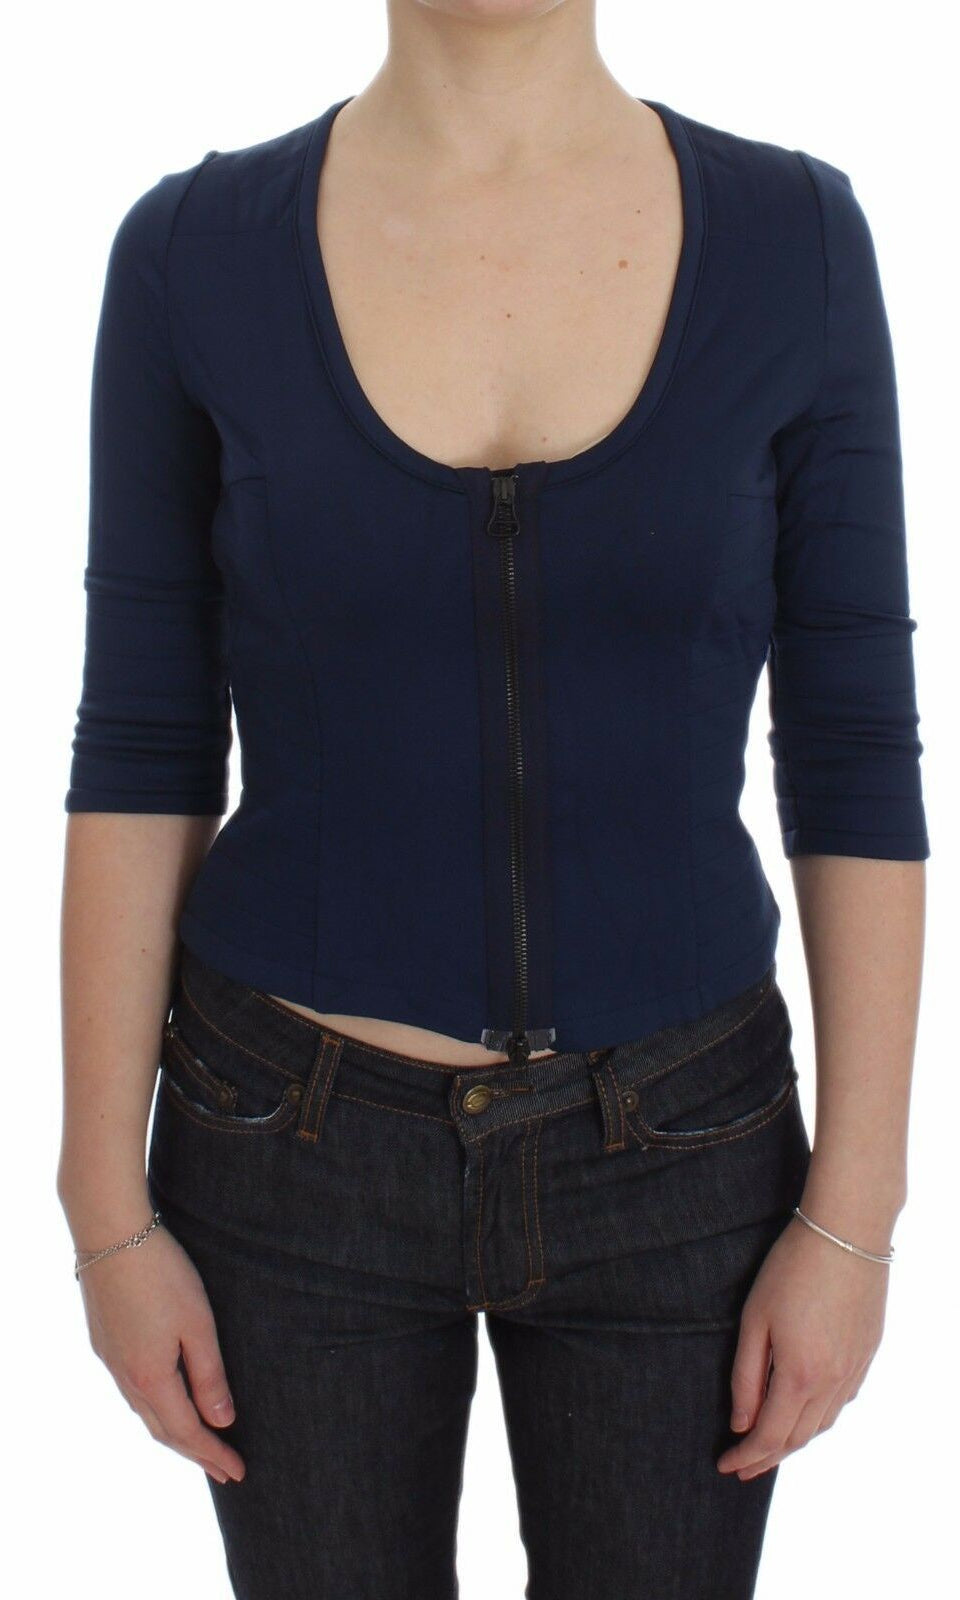 Exte Blue Cotton Top Zipper Deep Crew-neck Sweater GENUINE AUTHENTIC BRAND LLC